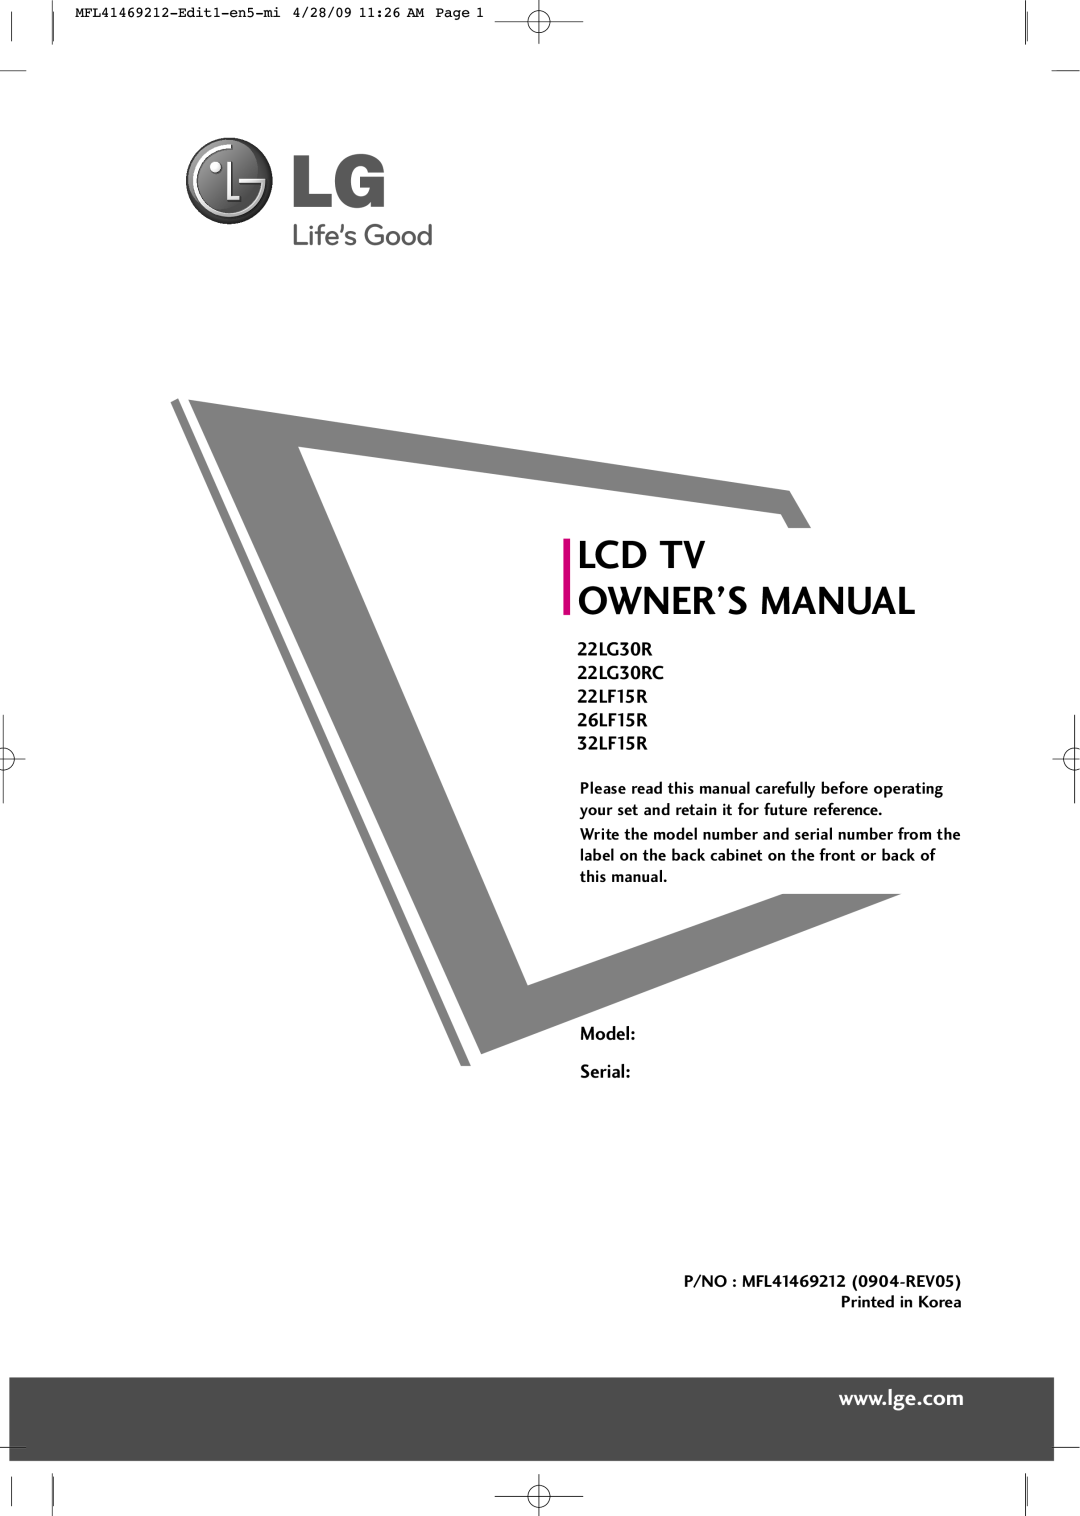 LG Electronics 2230R-MA manual 22LG30R 22LG30RC 22LF15R 26LF15R 32LF15R, Model Serial, Lcd Tv Owner’S Manual 